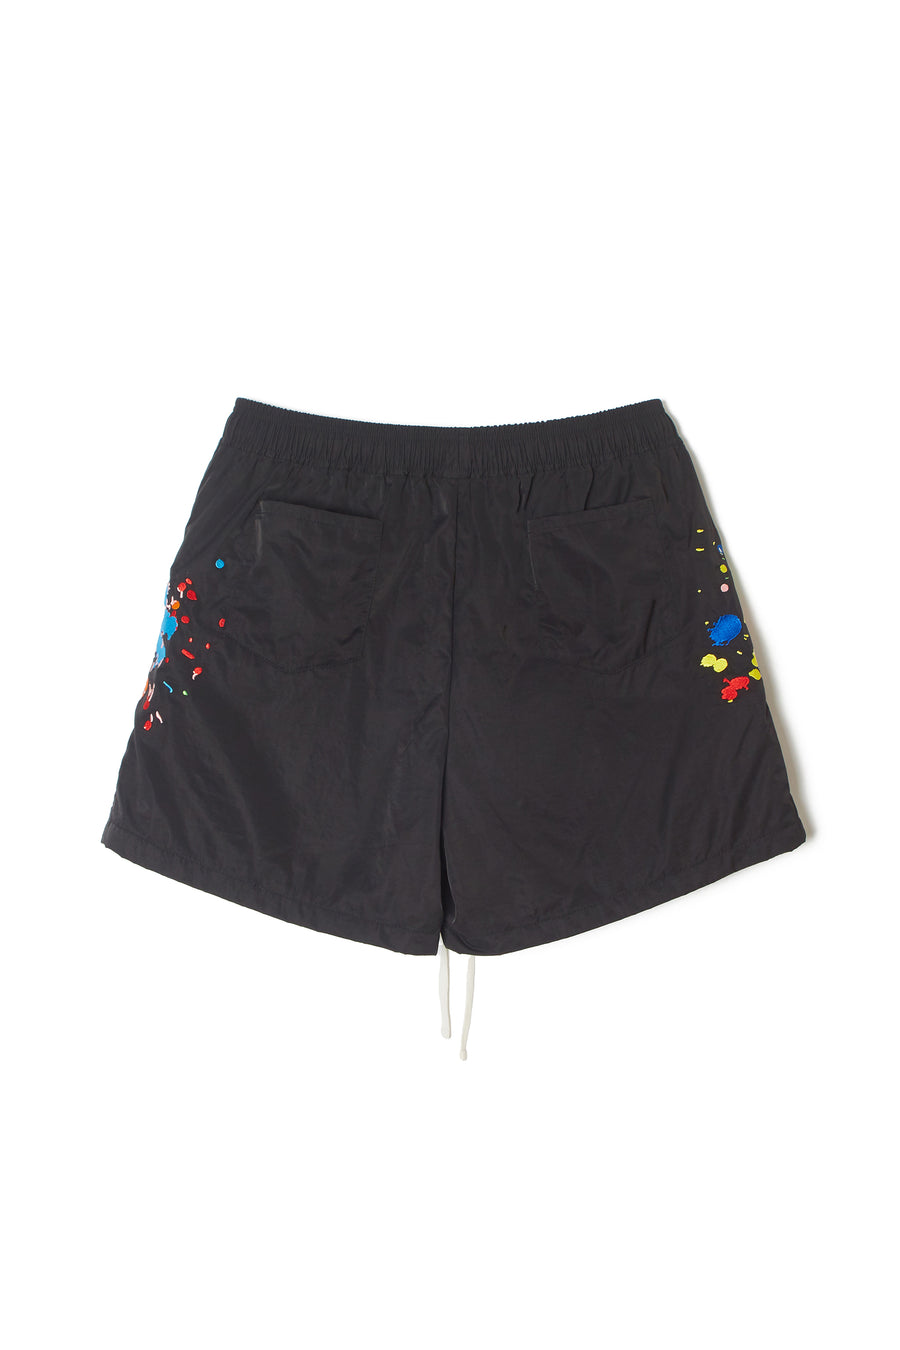 MAYO PAINT Embroidery Swim Shorts - BLACK